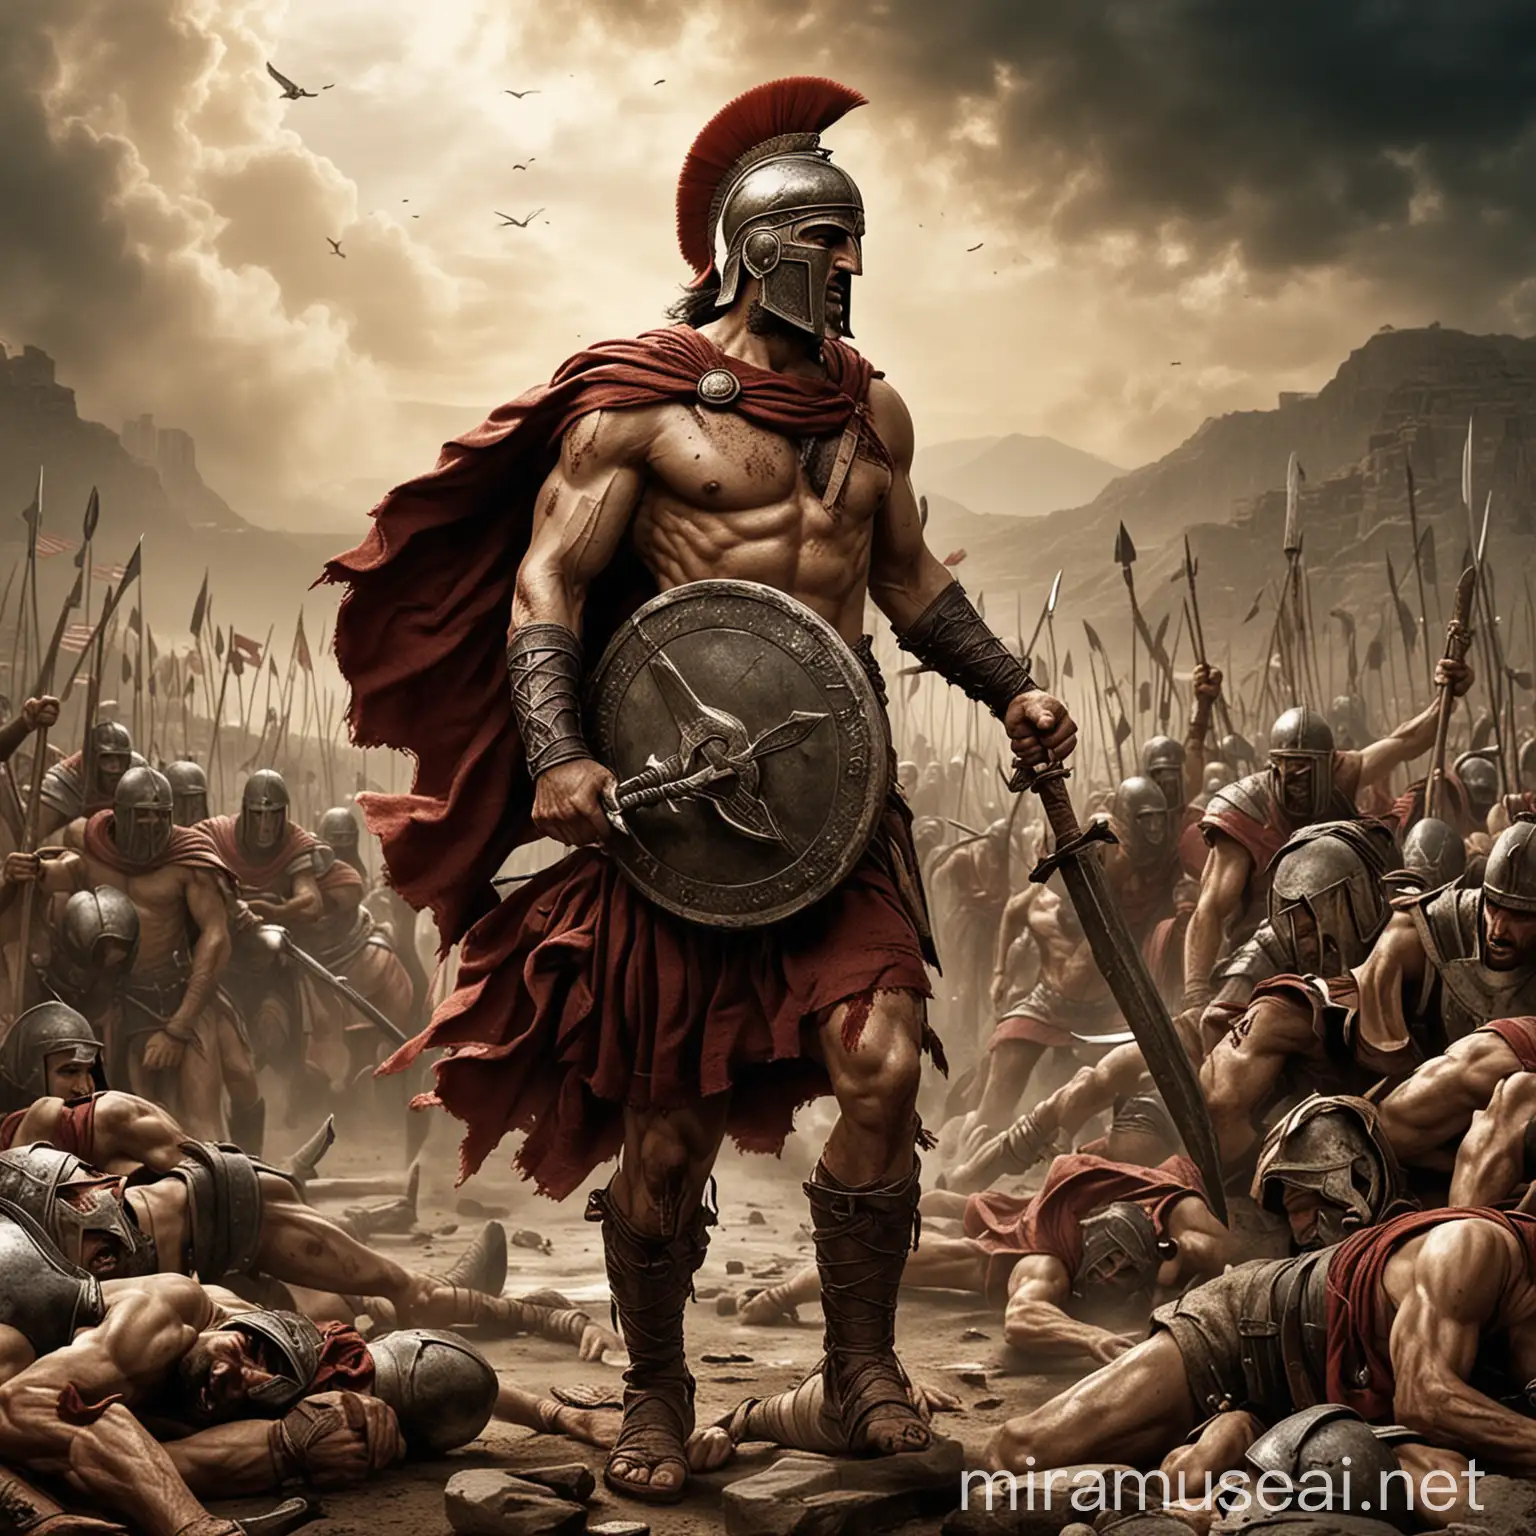 sparta honor and sacrifice
